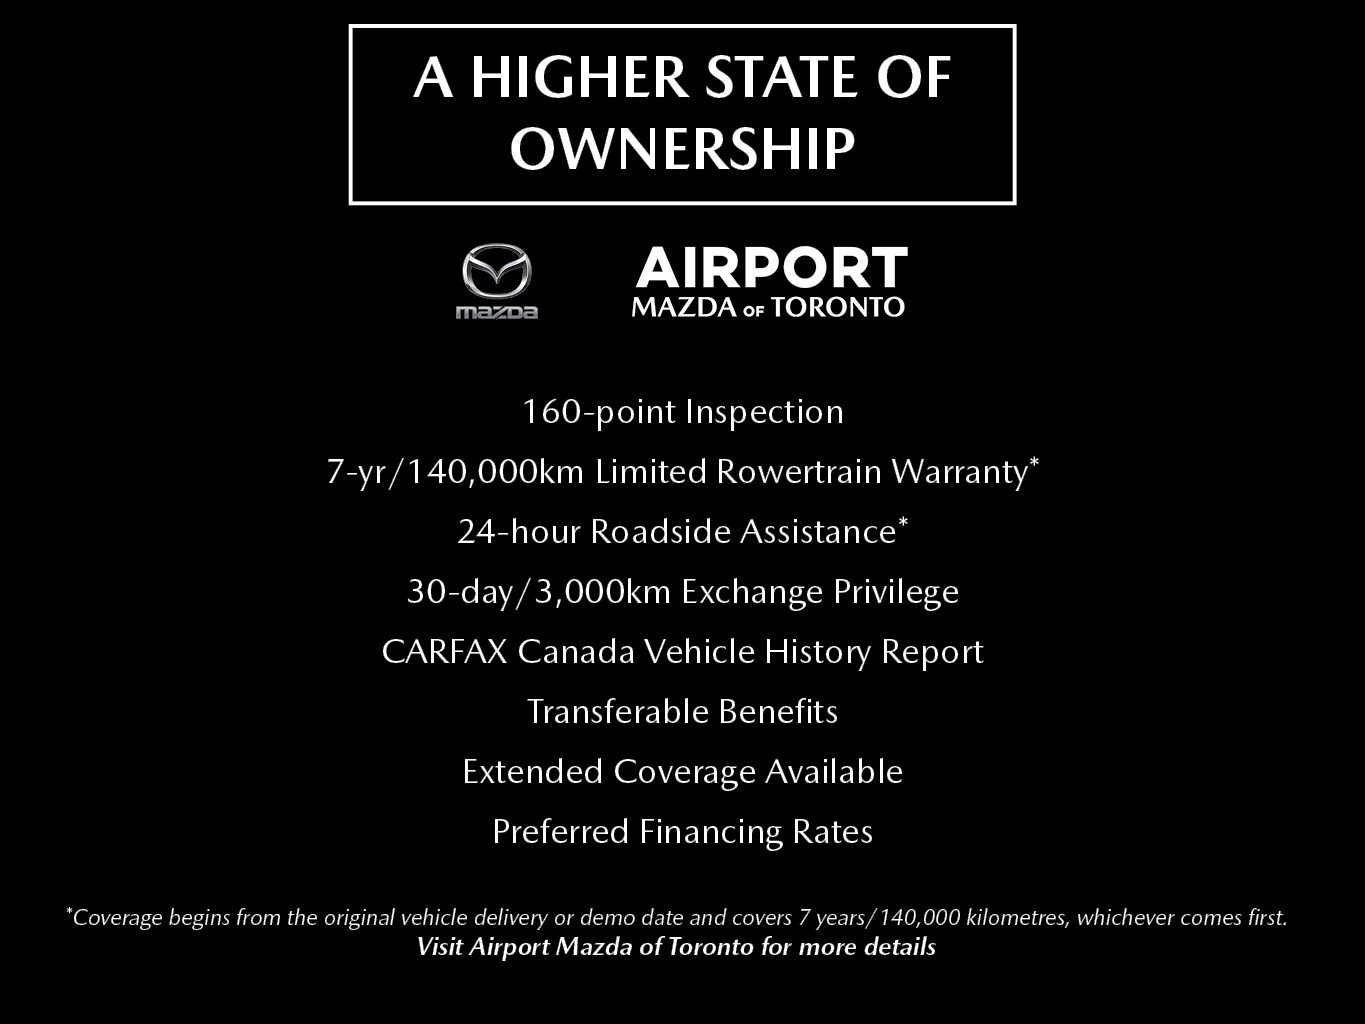 Certified Used Mazda Cars in Toronto, Ontario - Airport Mazda Of Toronto